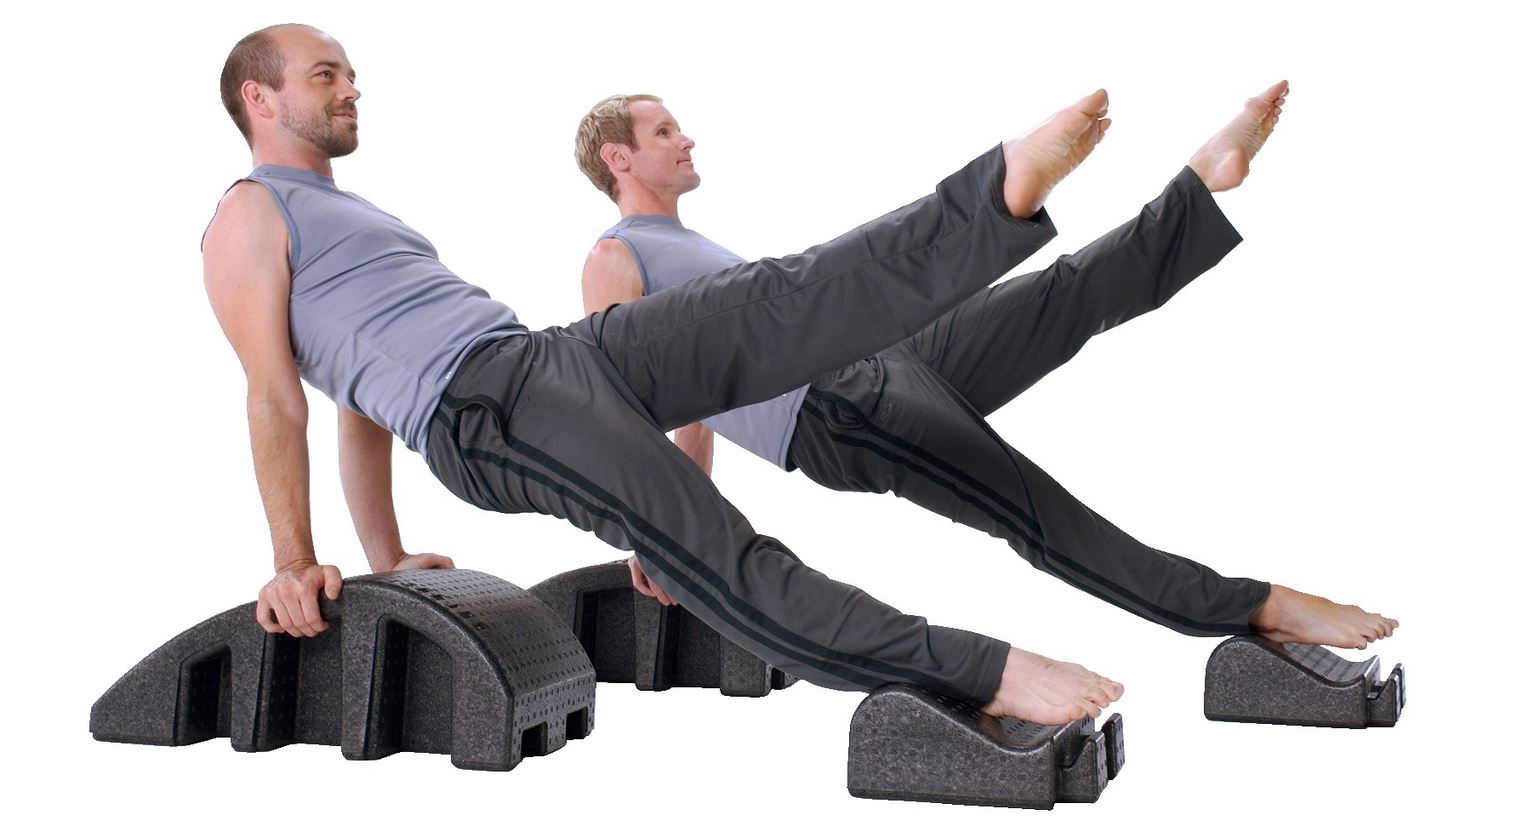 The New Pilates ARC from Balanced Body aka “The Abdominal